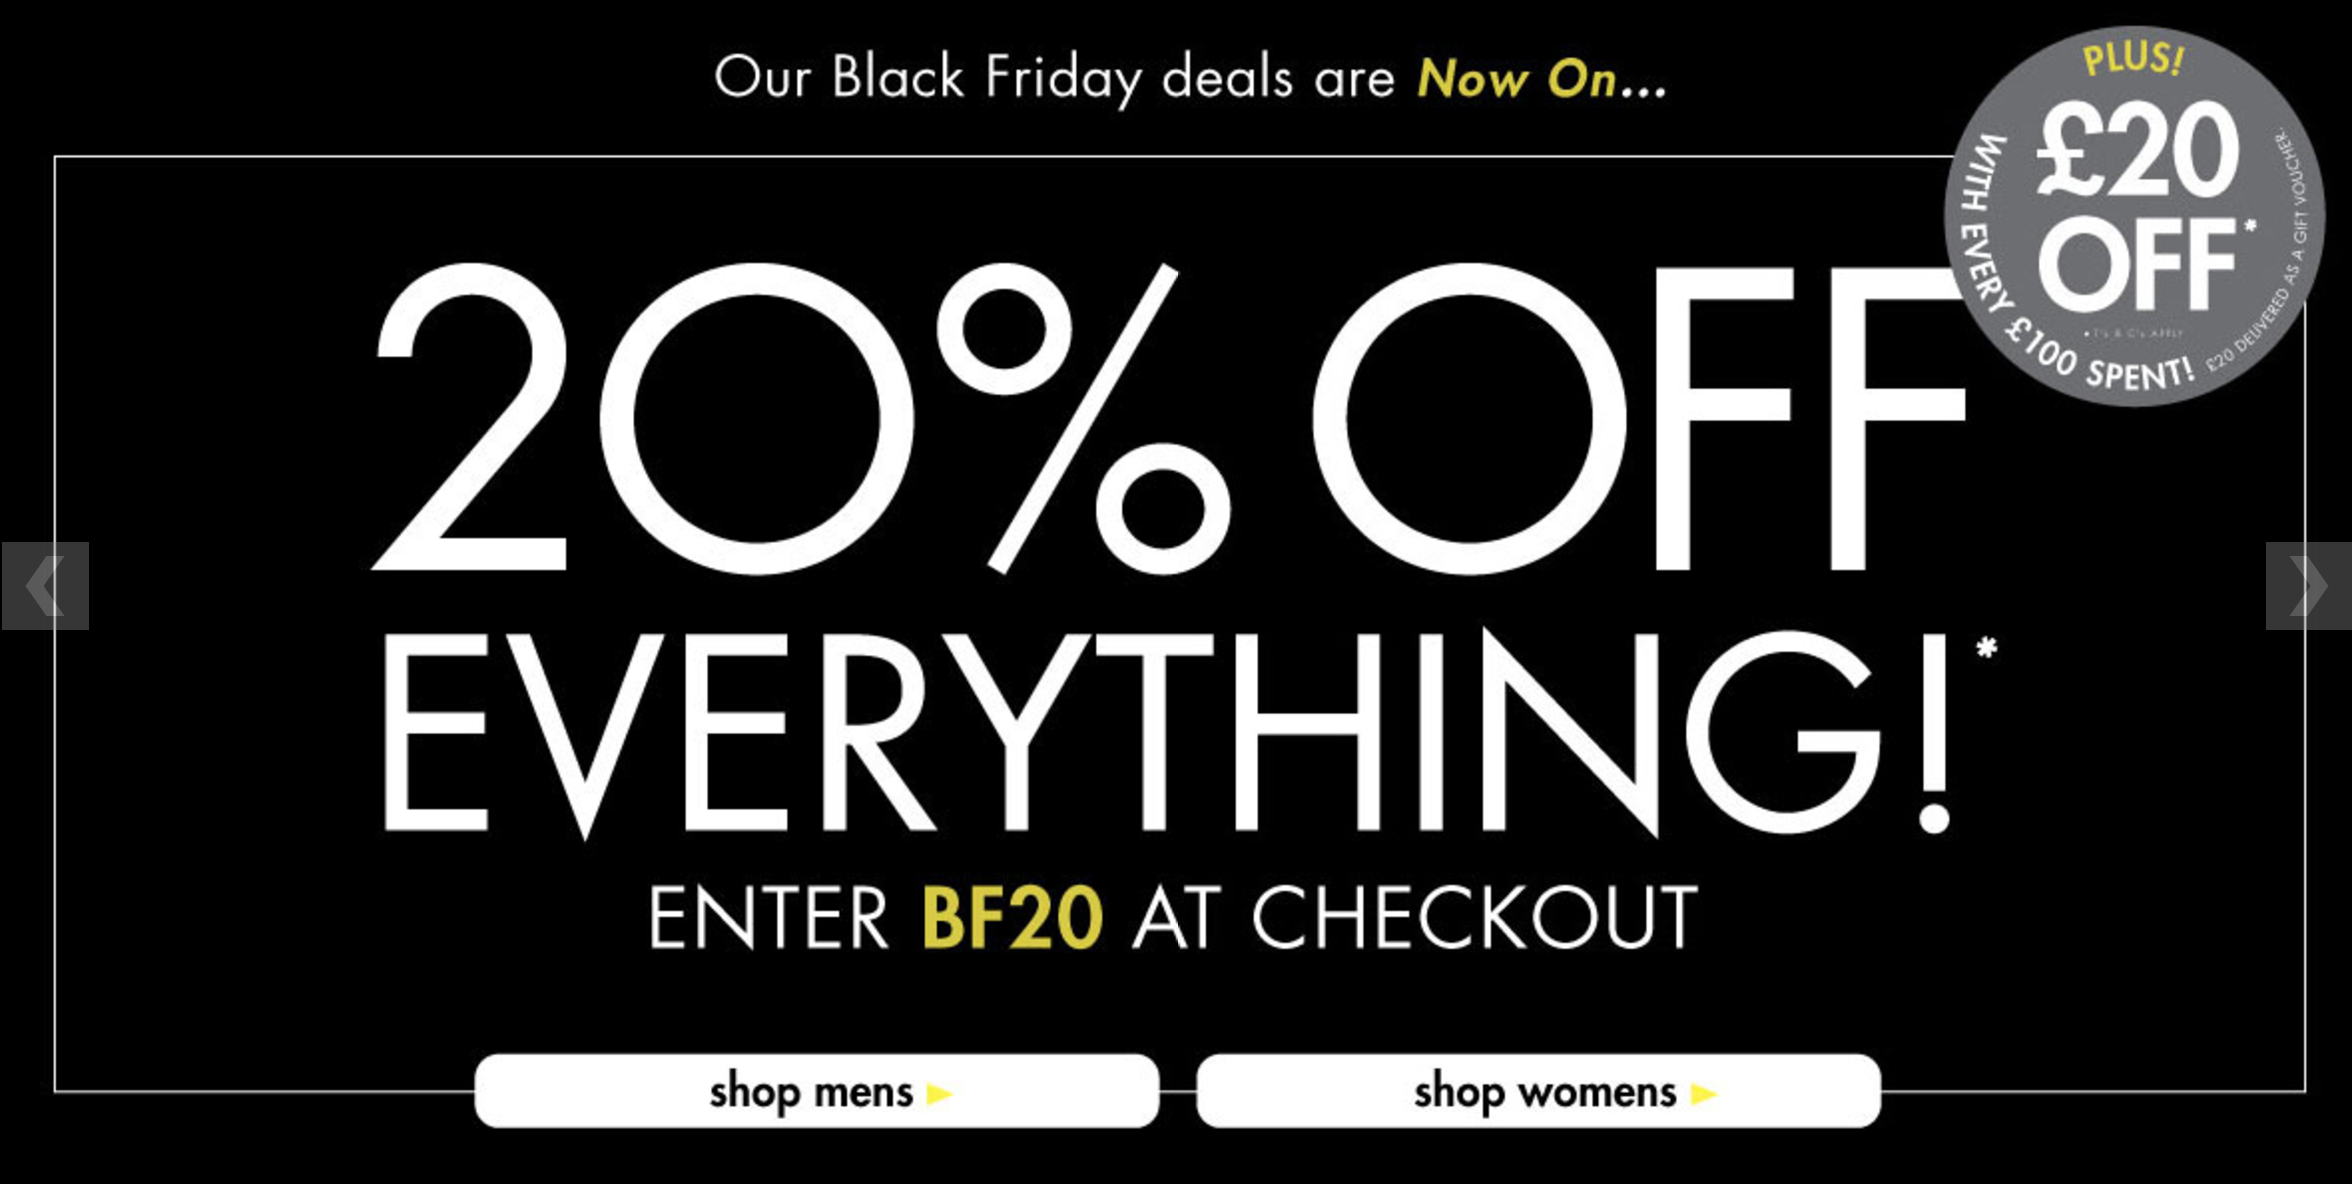 Black Friday USC: 20% off everything